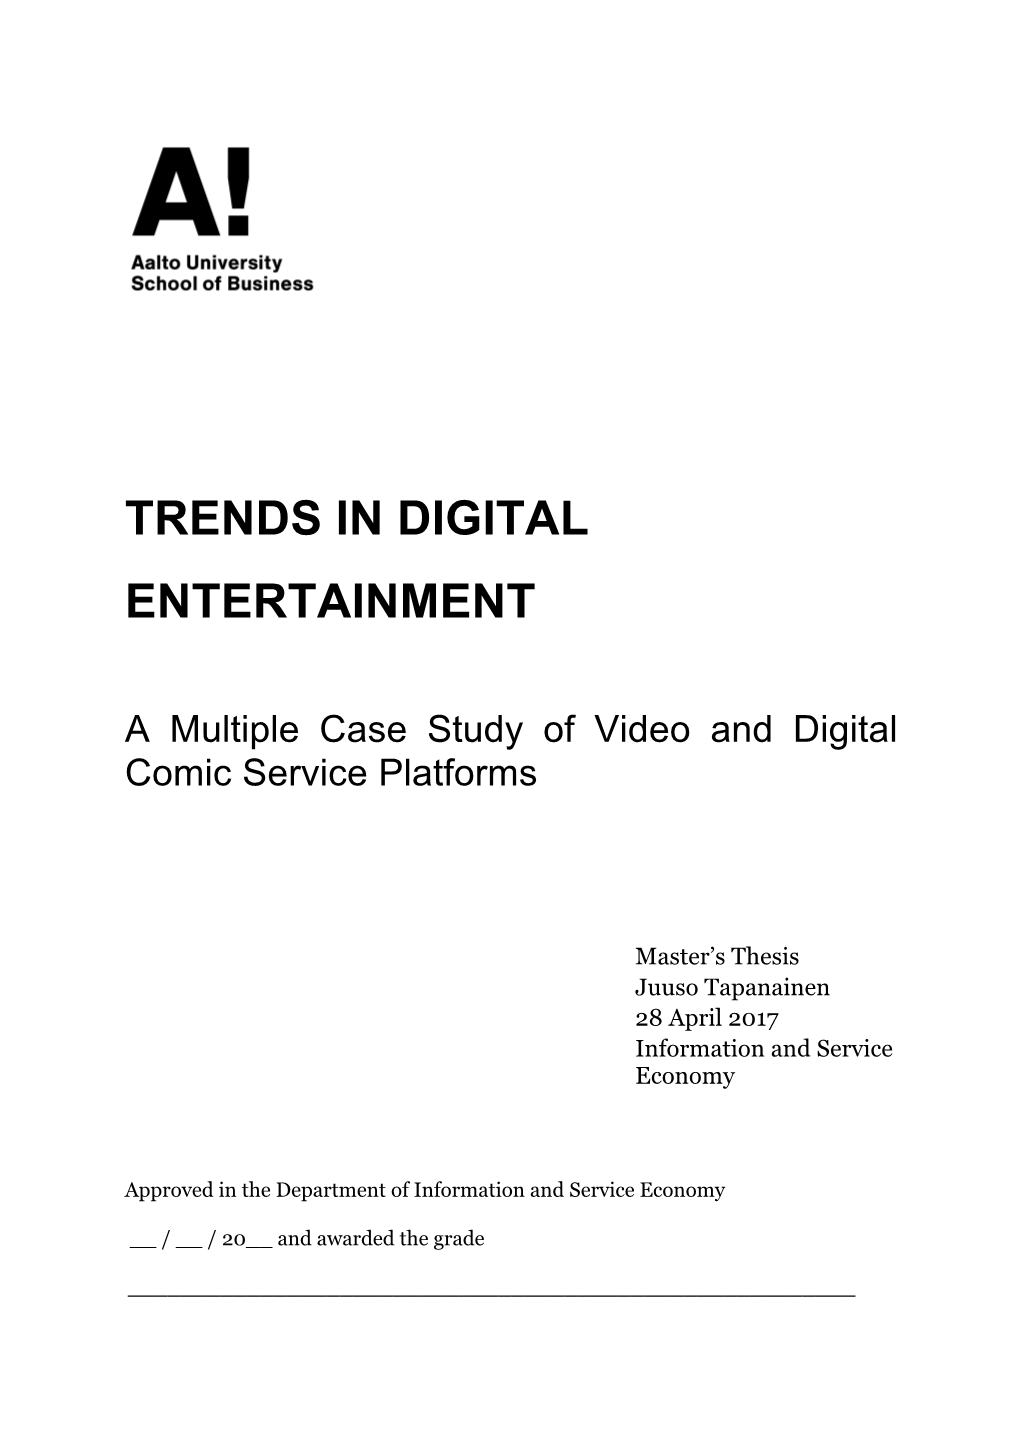 Trends in Digital Entertainment